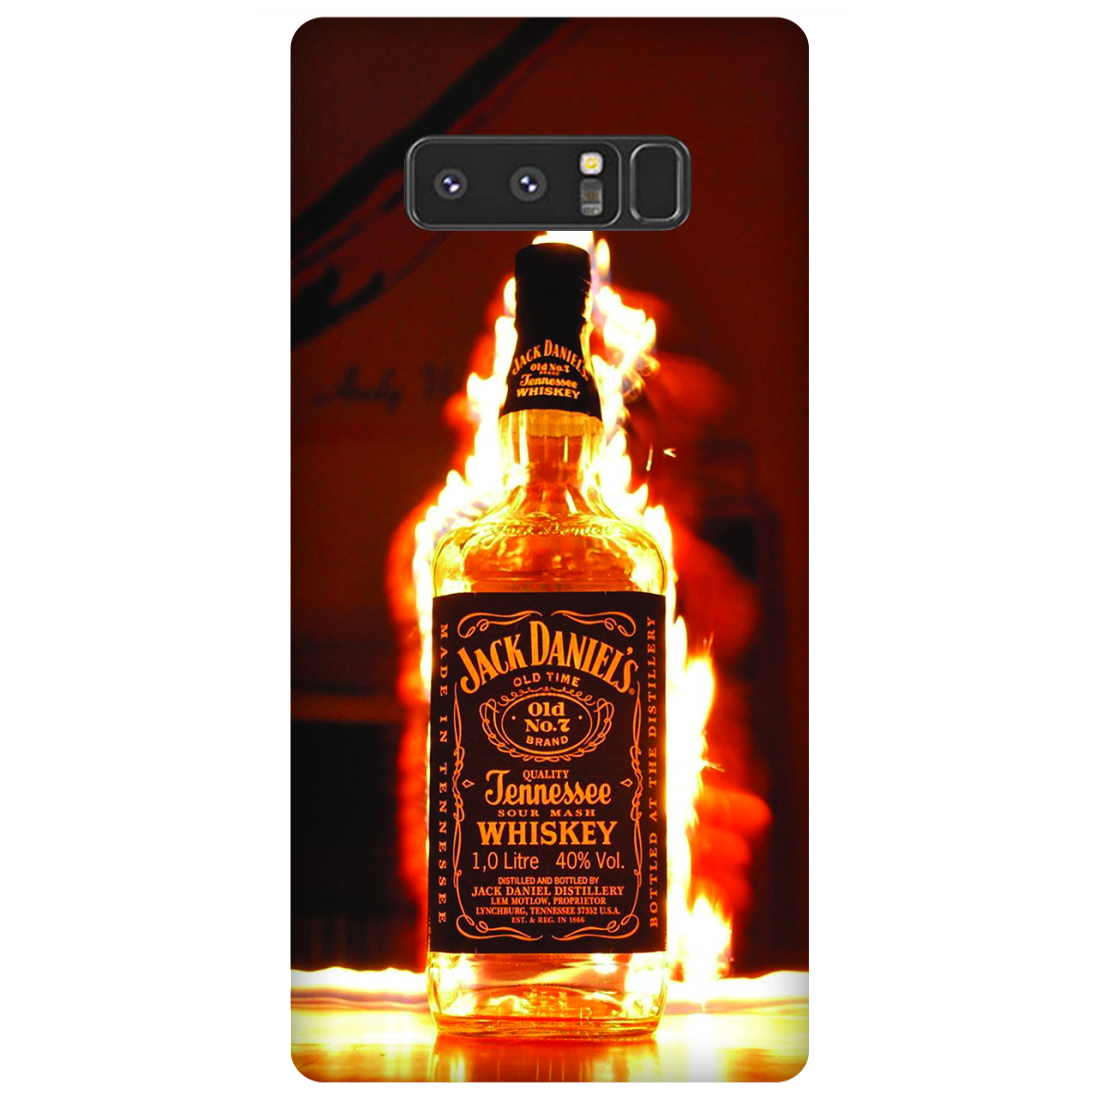 Flaming Jack Daniel Bottle Case Samsung Galaxy Note 8